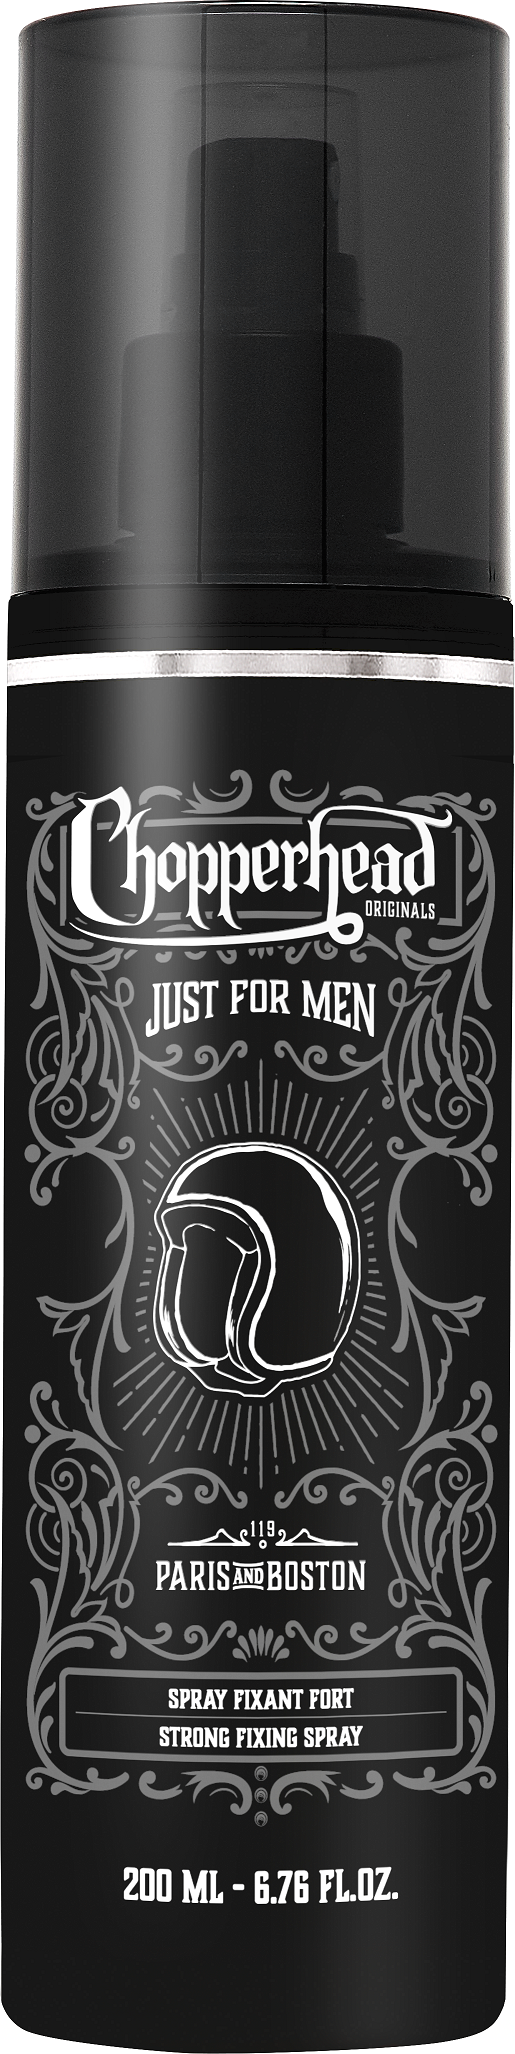 CHOPPERHEAD STYLE SPRAY...